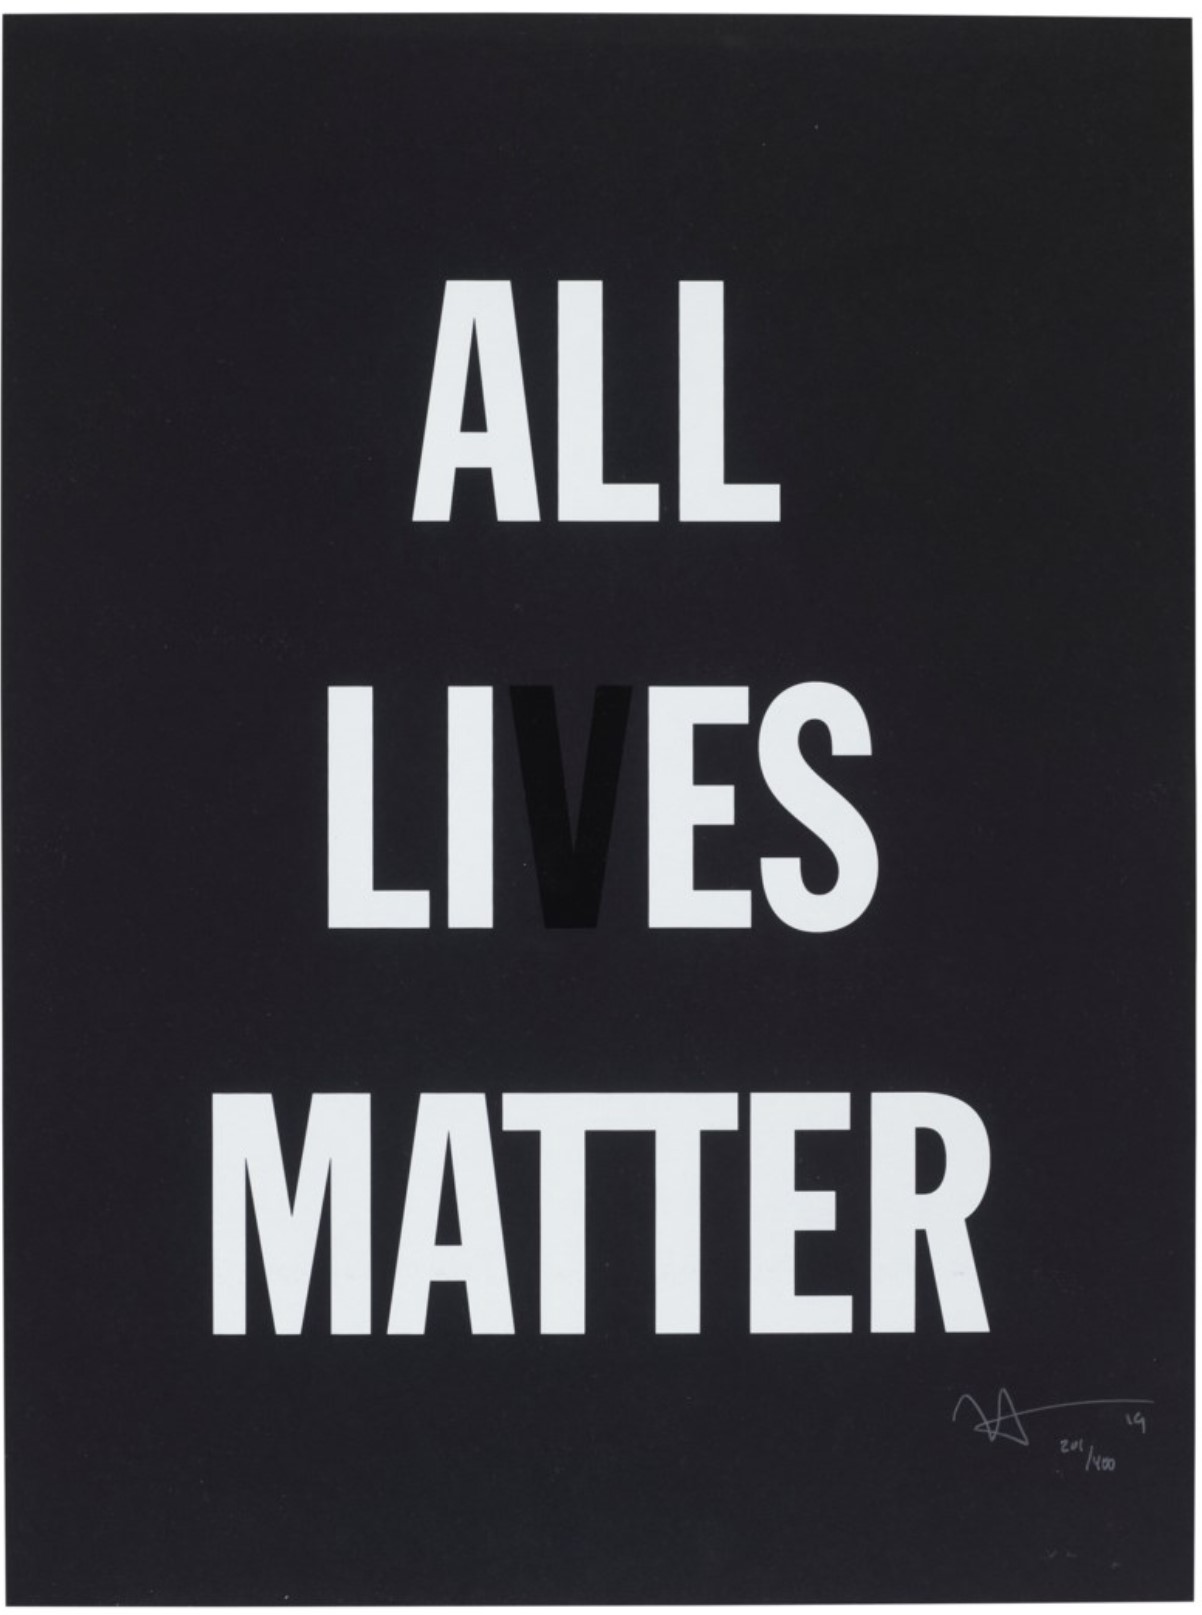 Hank Willis Thomas - All Lies Matter